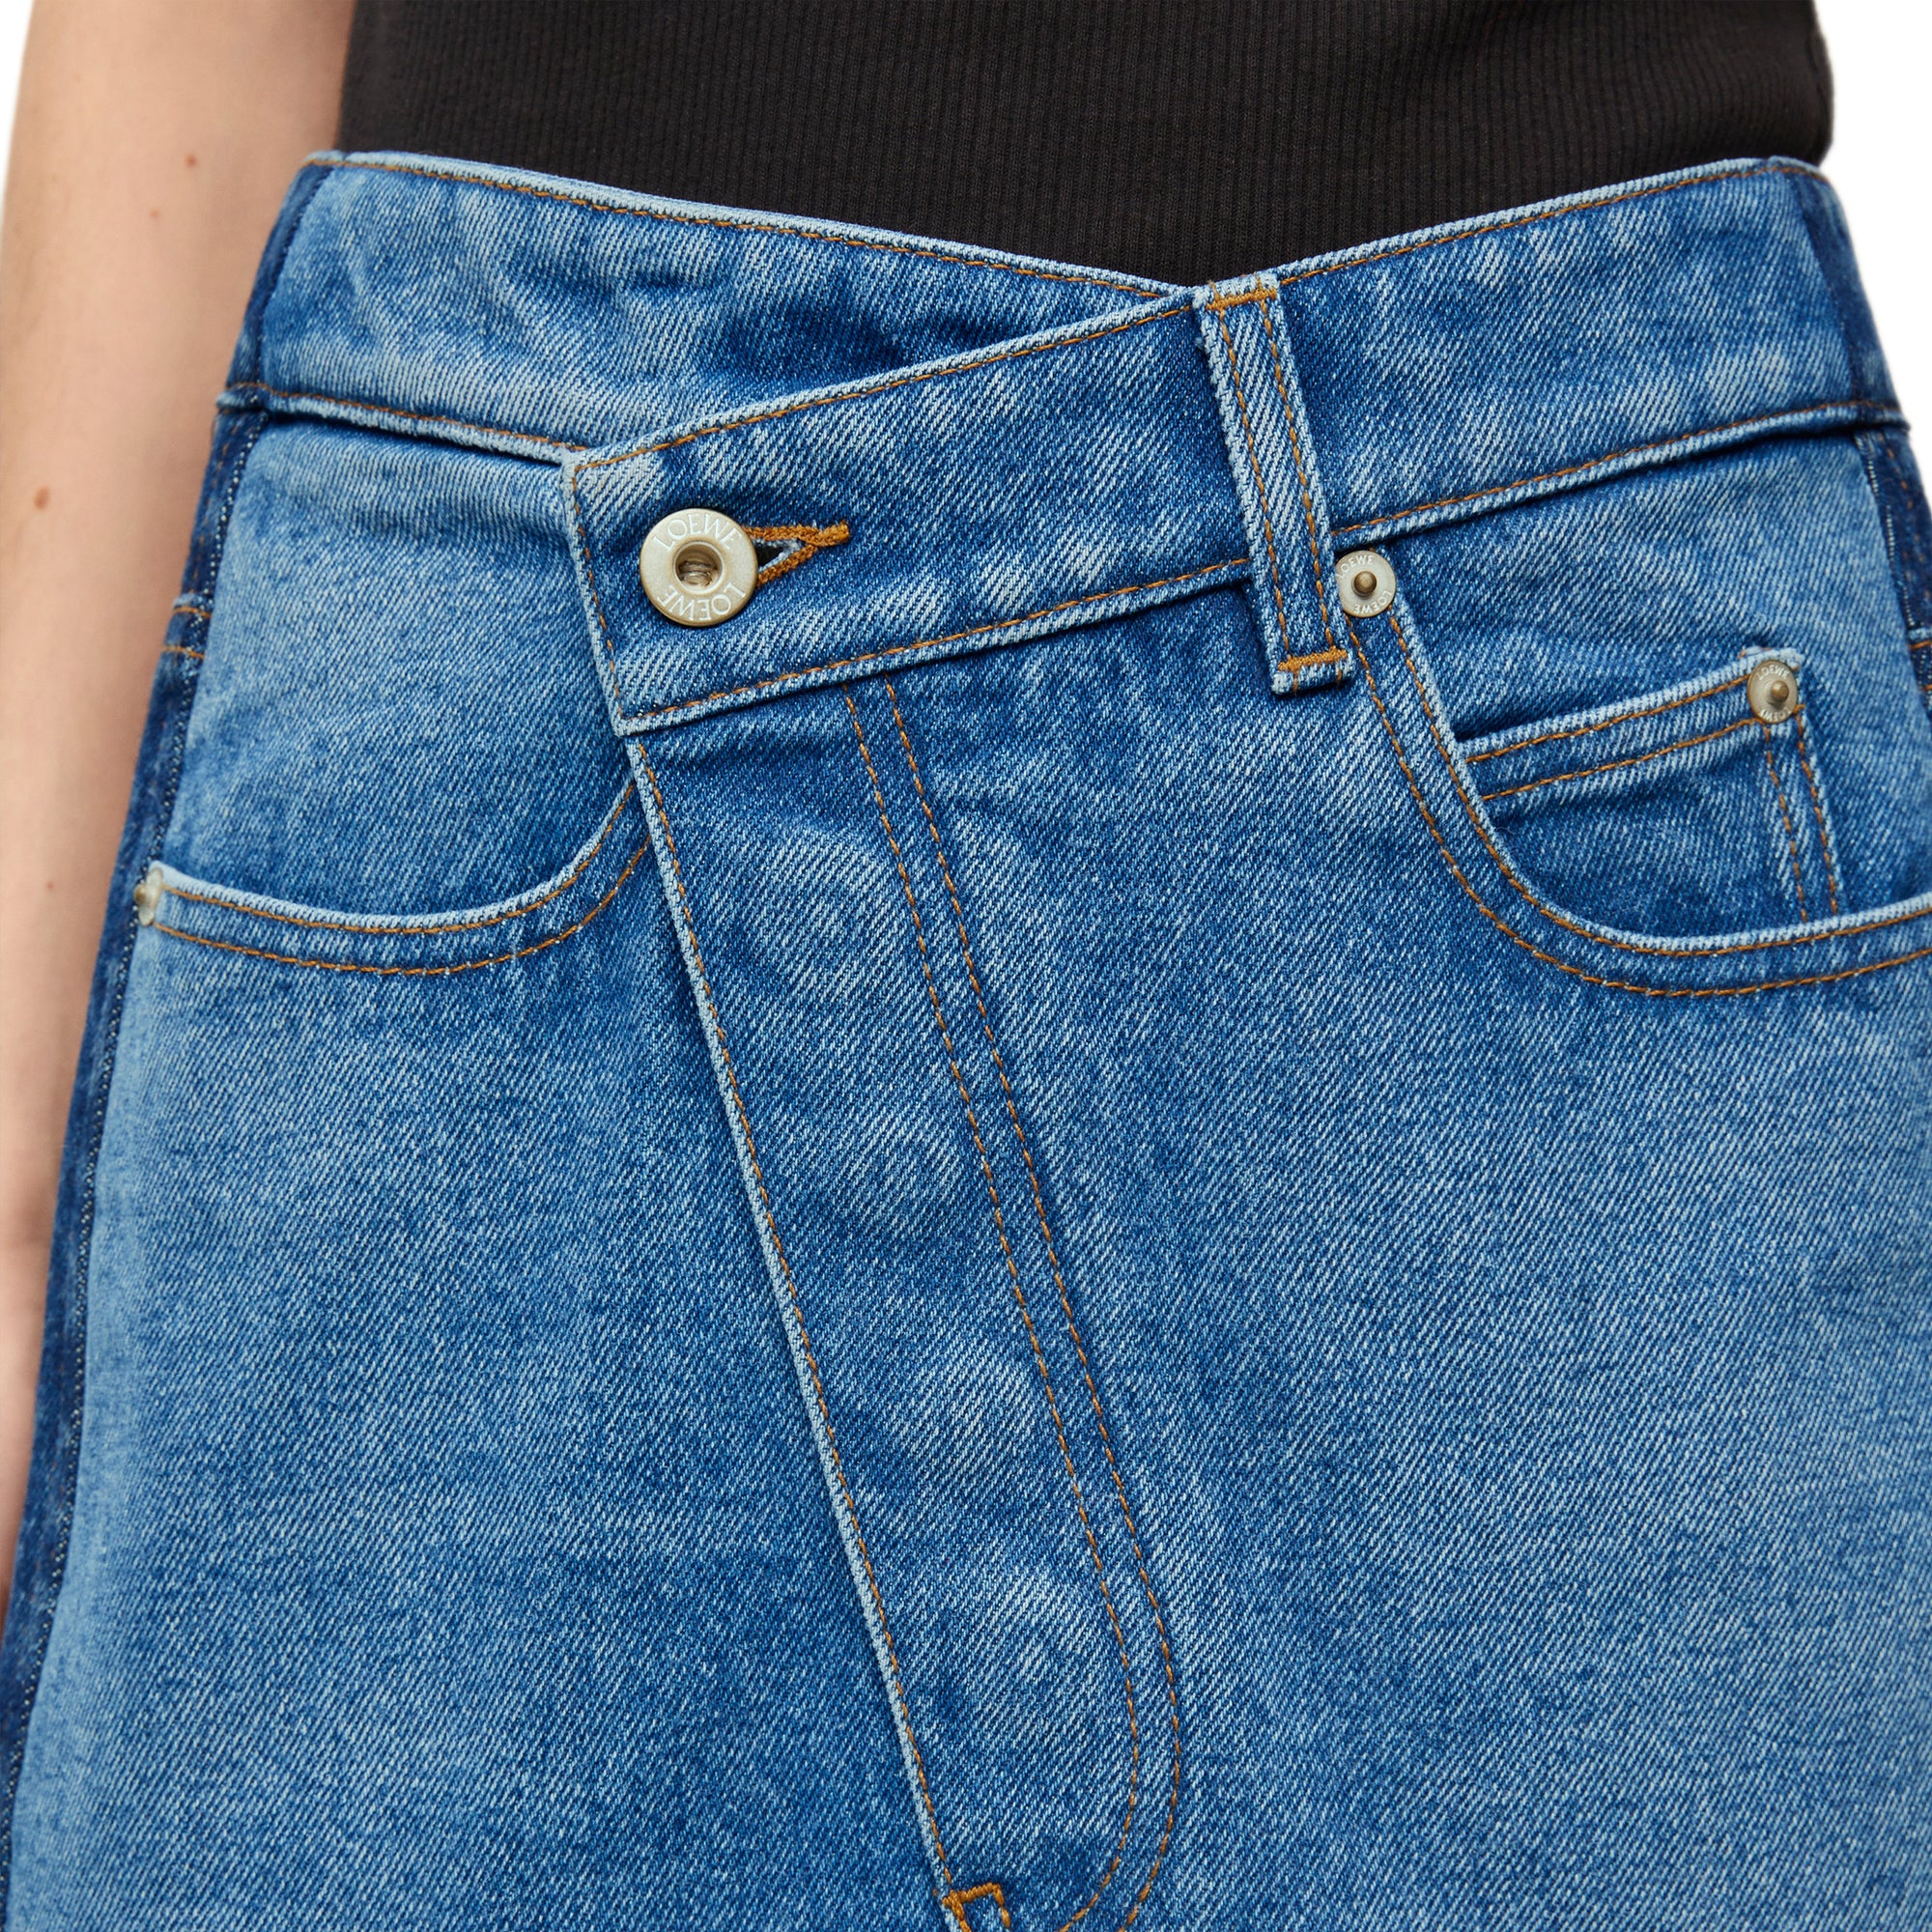 Loewe - Women’s Deconstructed Skirt - (Denim Blue) view 5